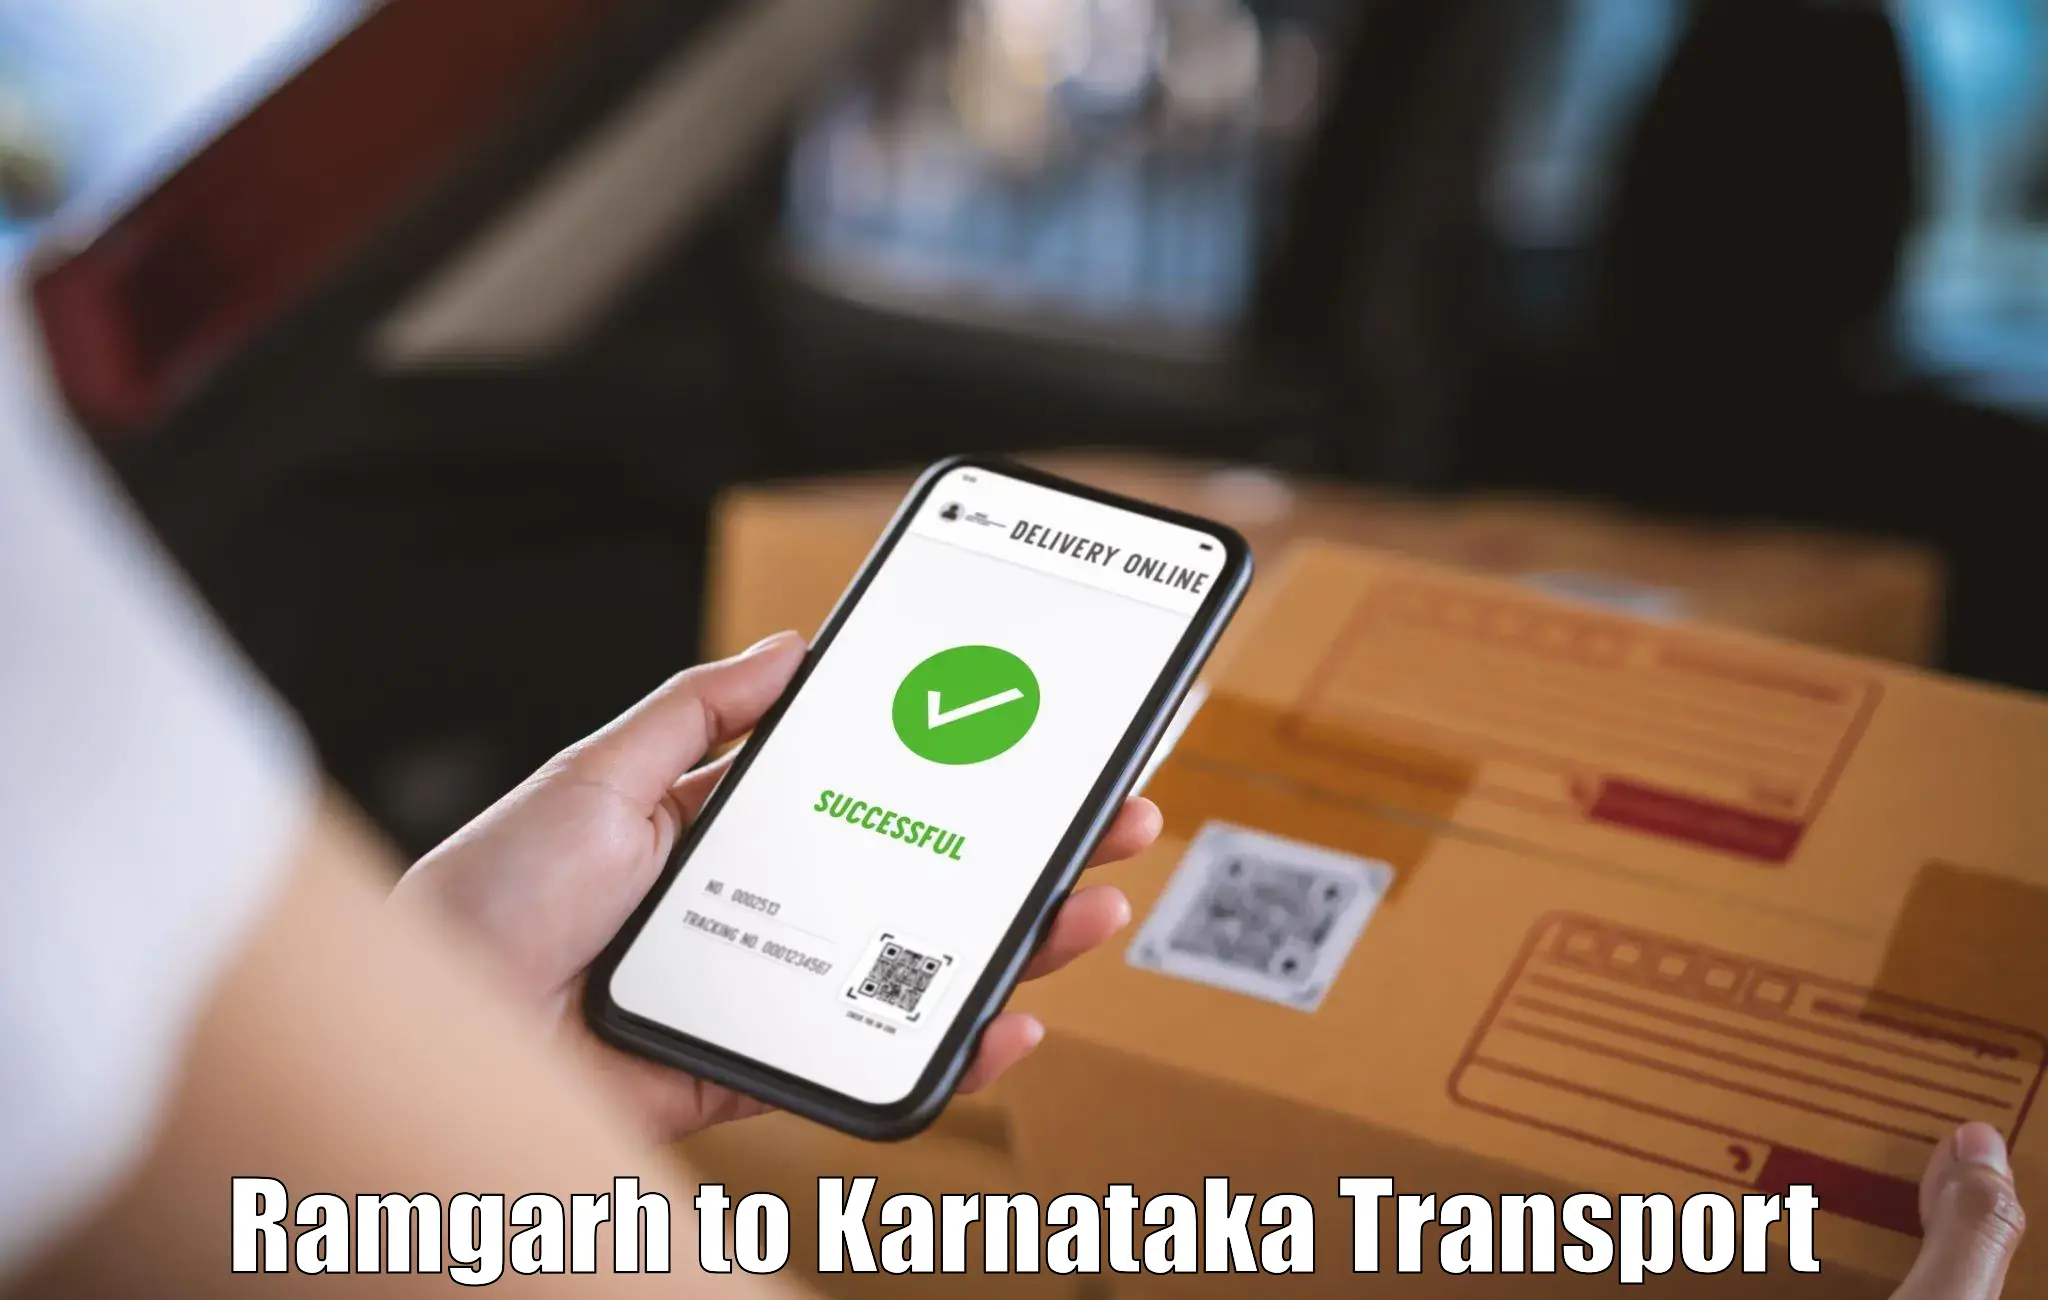 Goods delivery service Ramgarh to Moodabidri